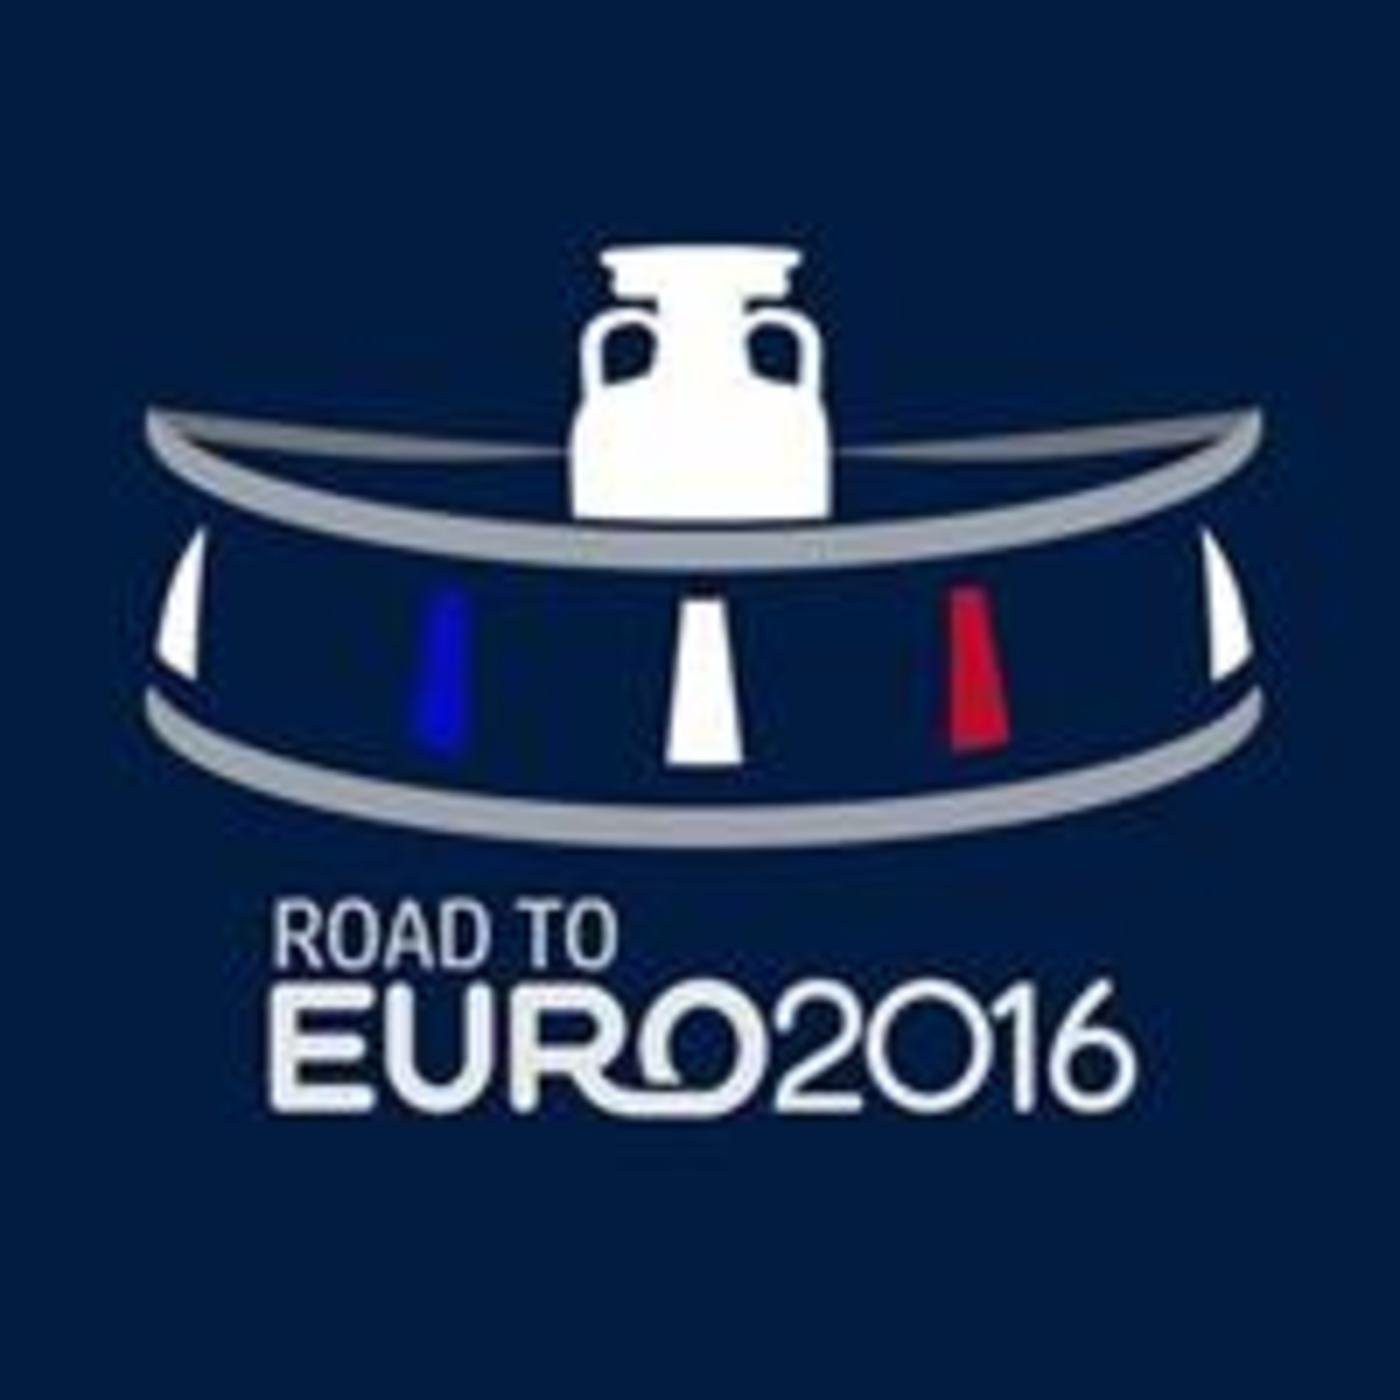 Road To Euro 2016